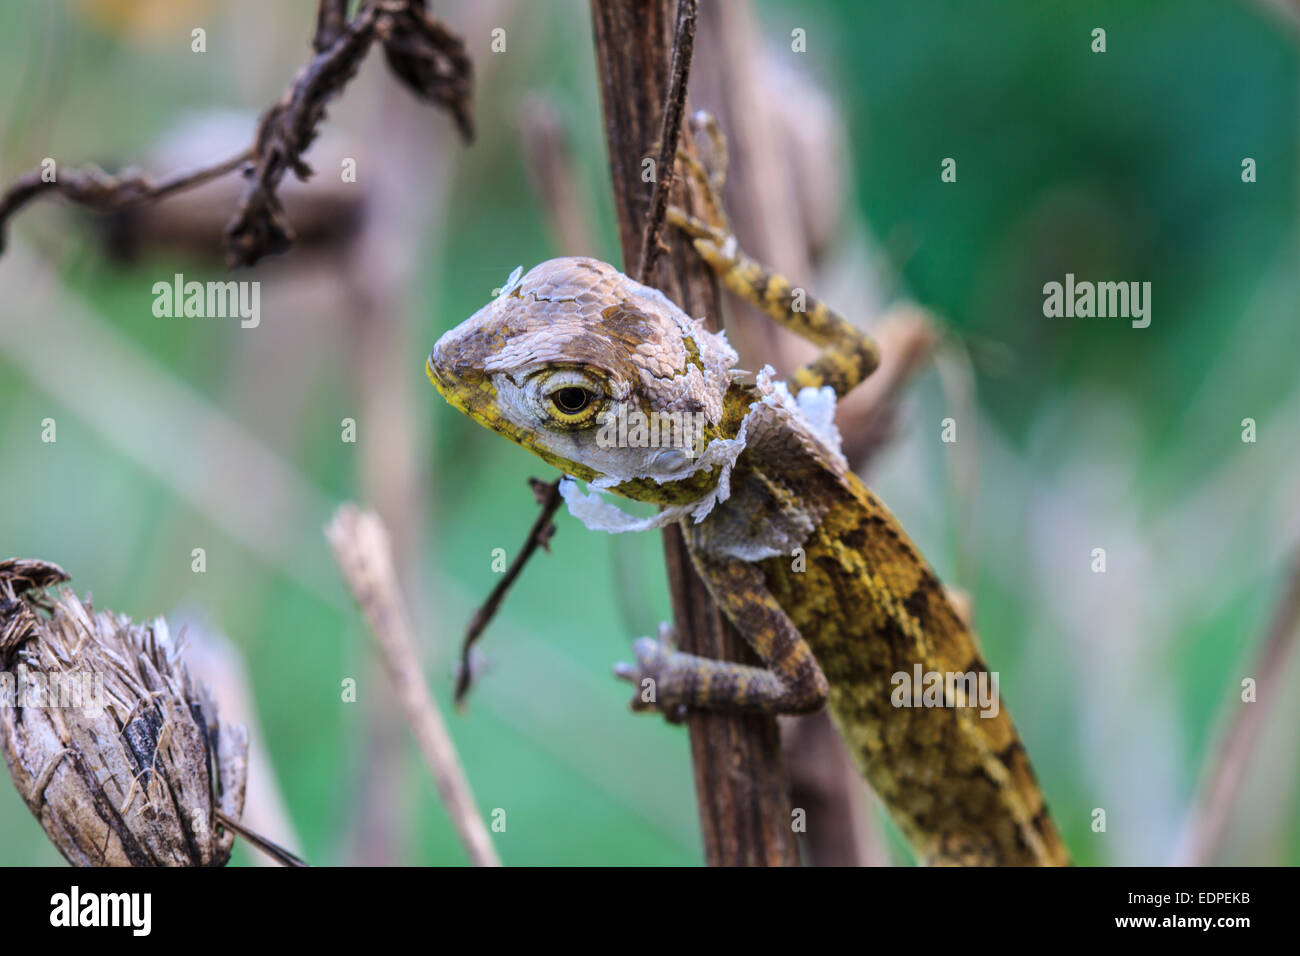 Green Lizard  changing skin resting on wood horizontal Stock Photo